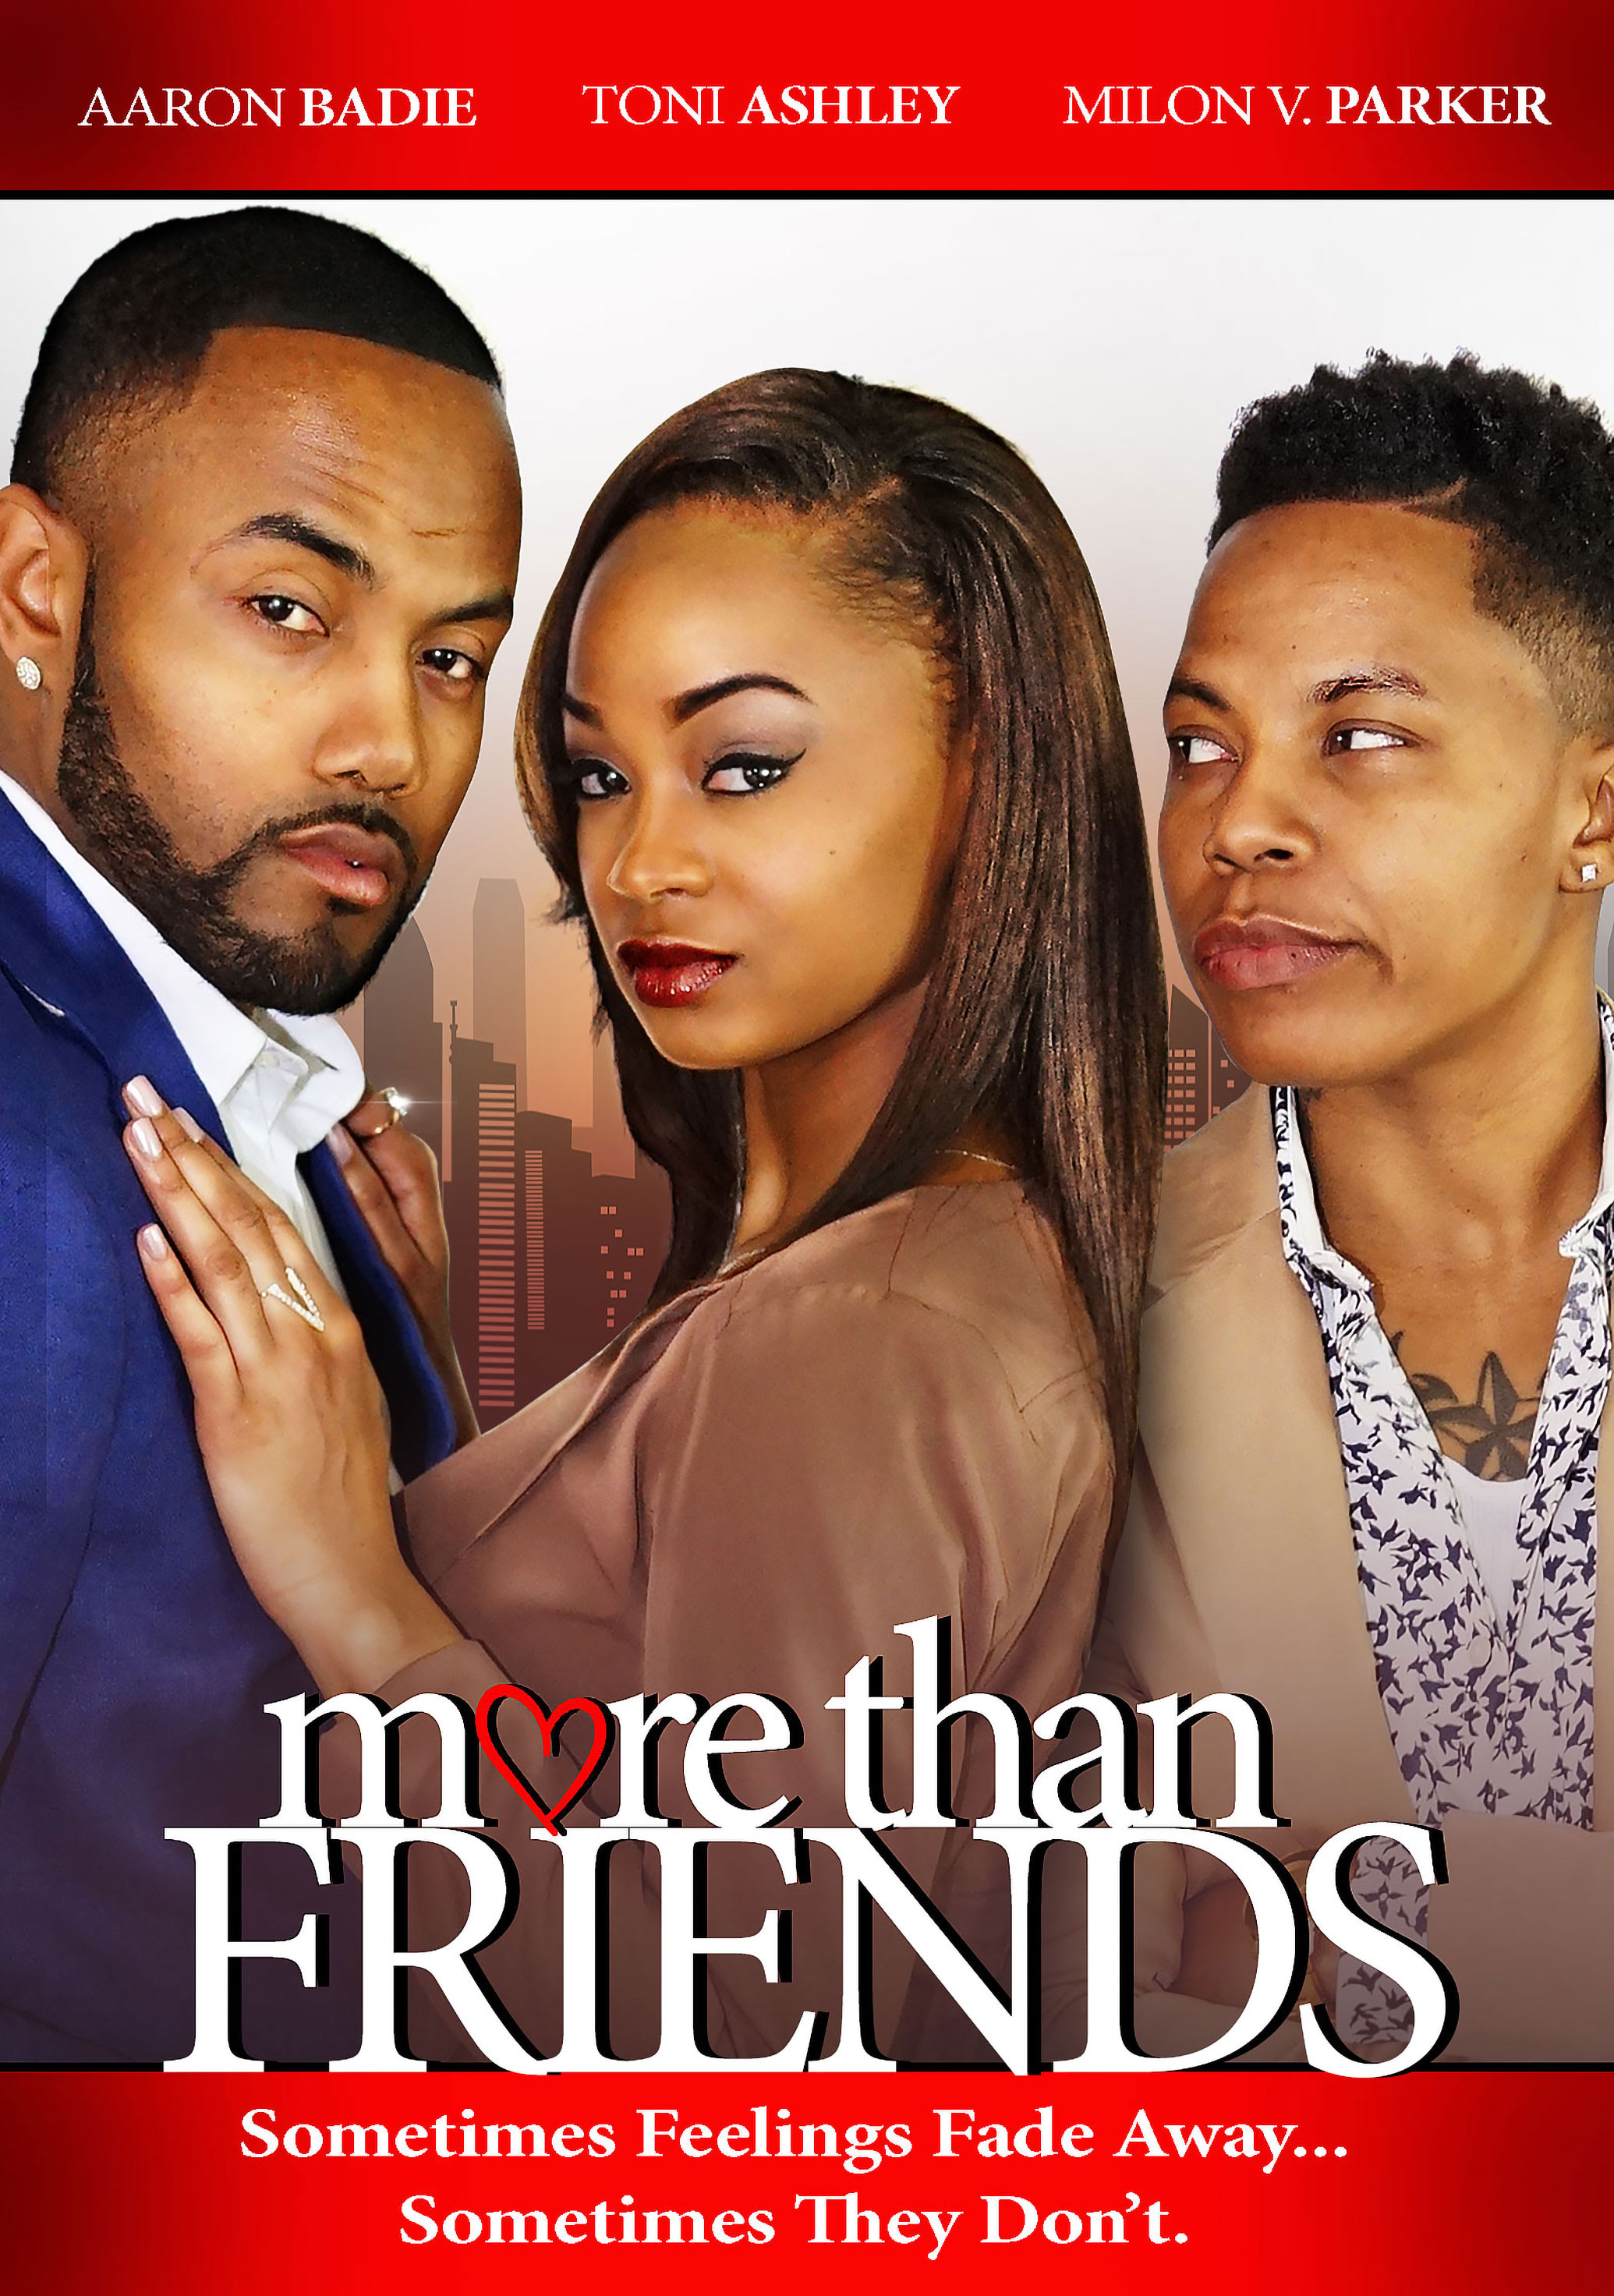 More than friends cast